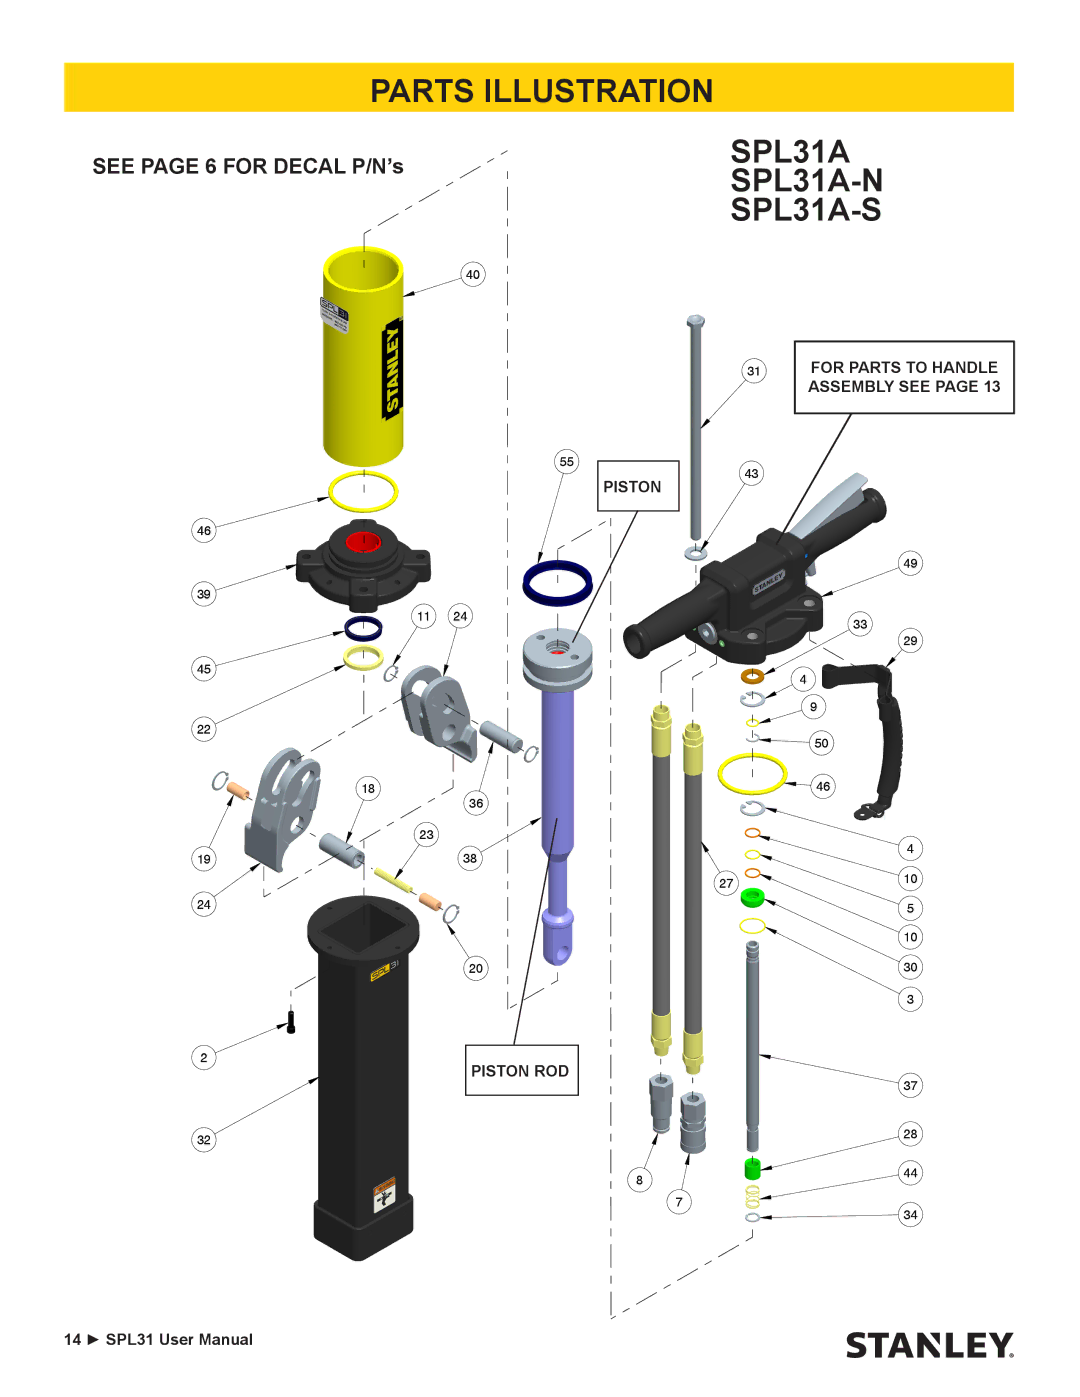 Stanley Black & Decker user manual Parts Illustration, SPL31A SPL31A-N SPL31A-S 